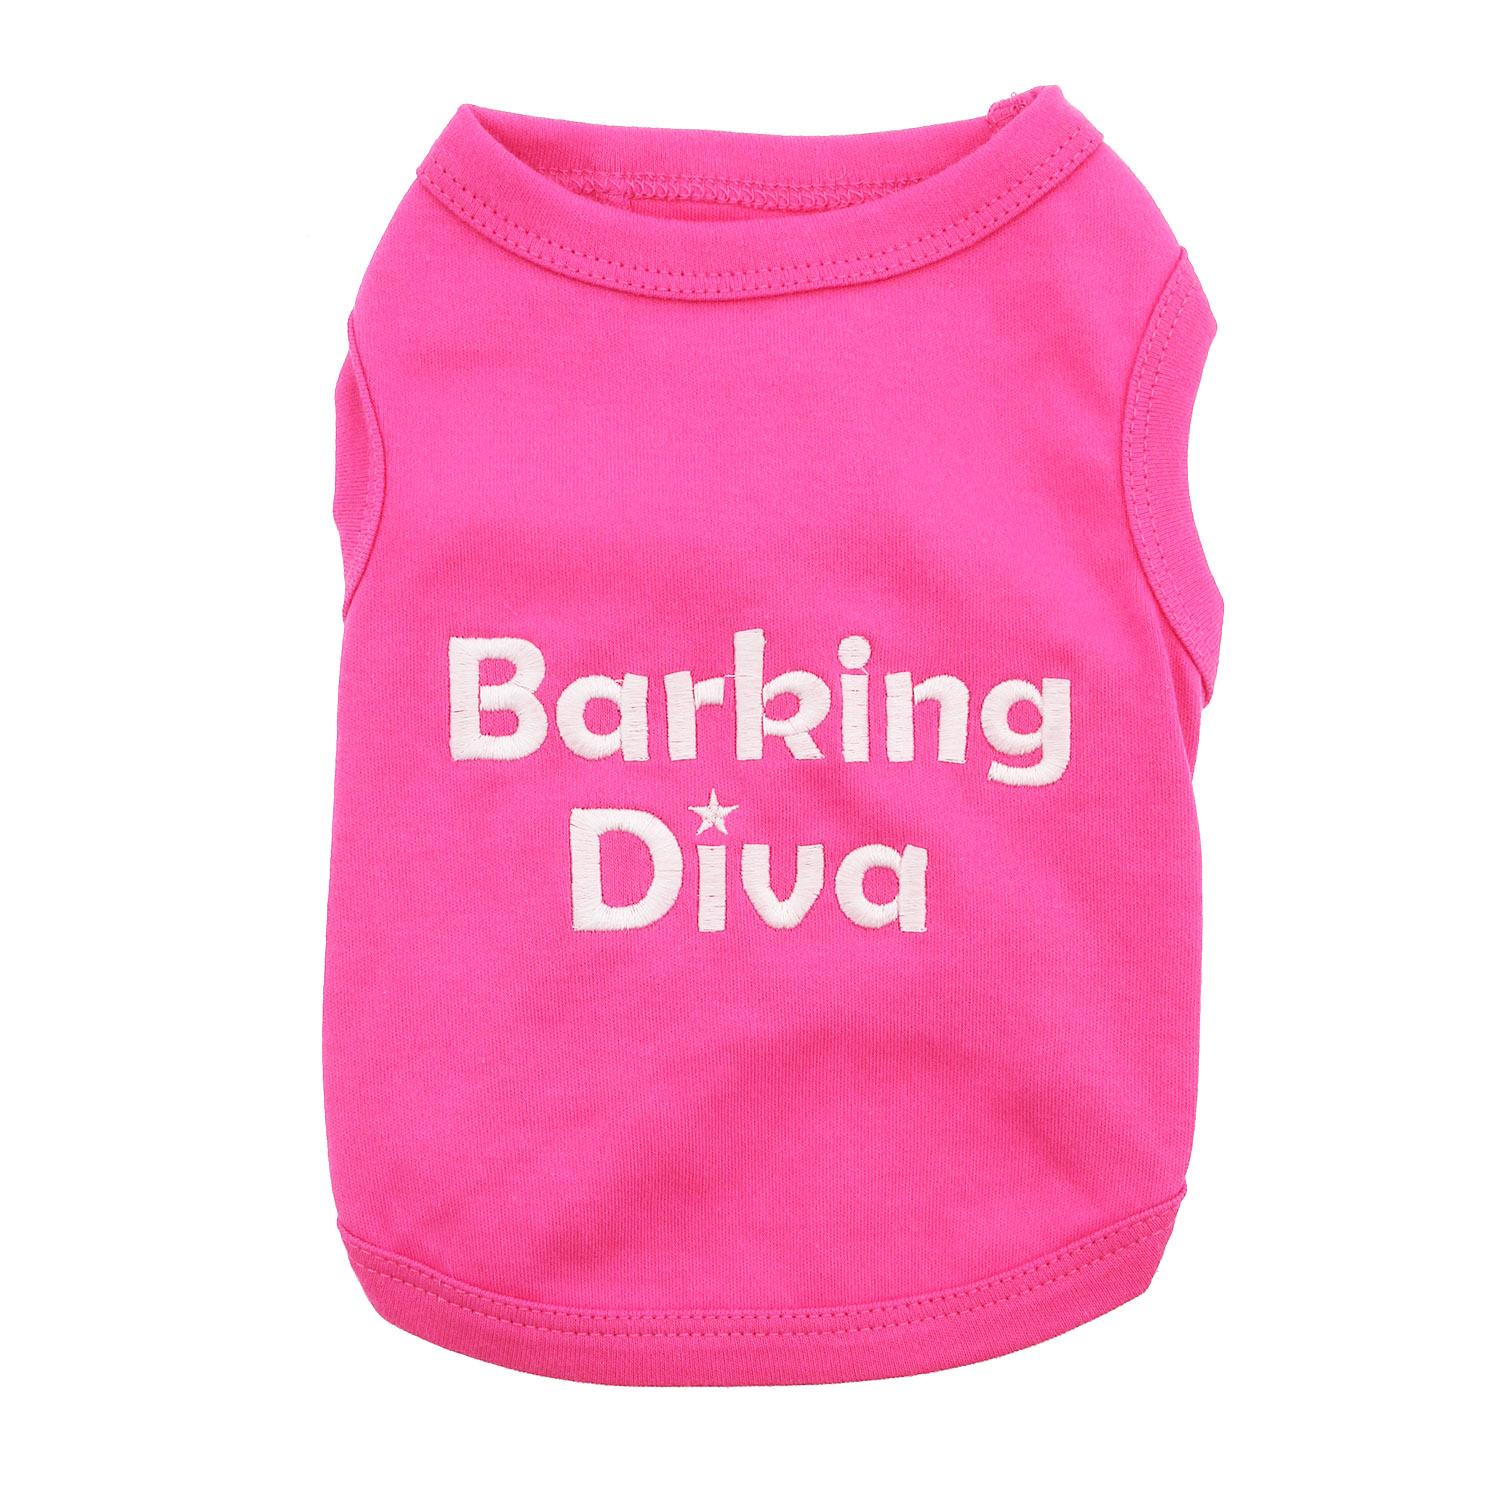 Barking Diva Dog Tank by Parisian Pet - Pink